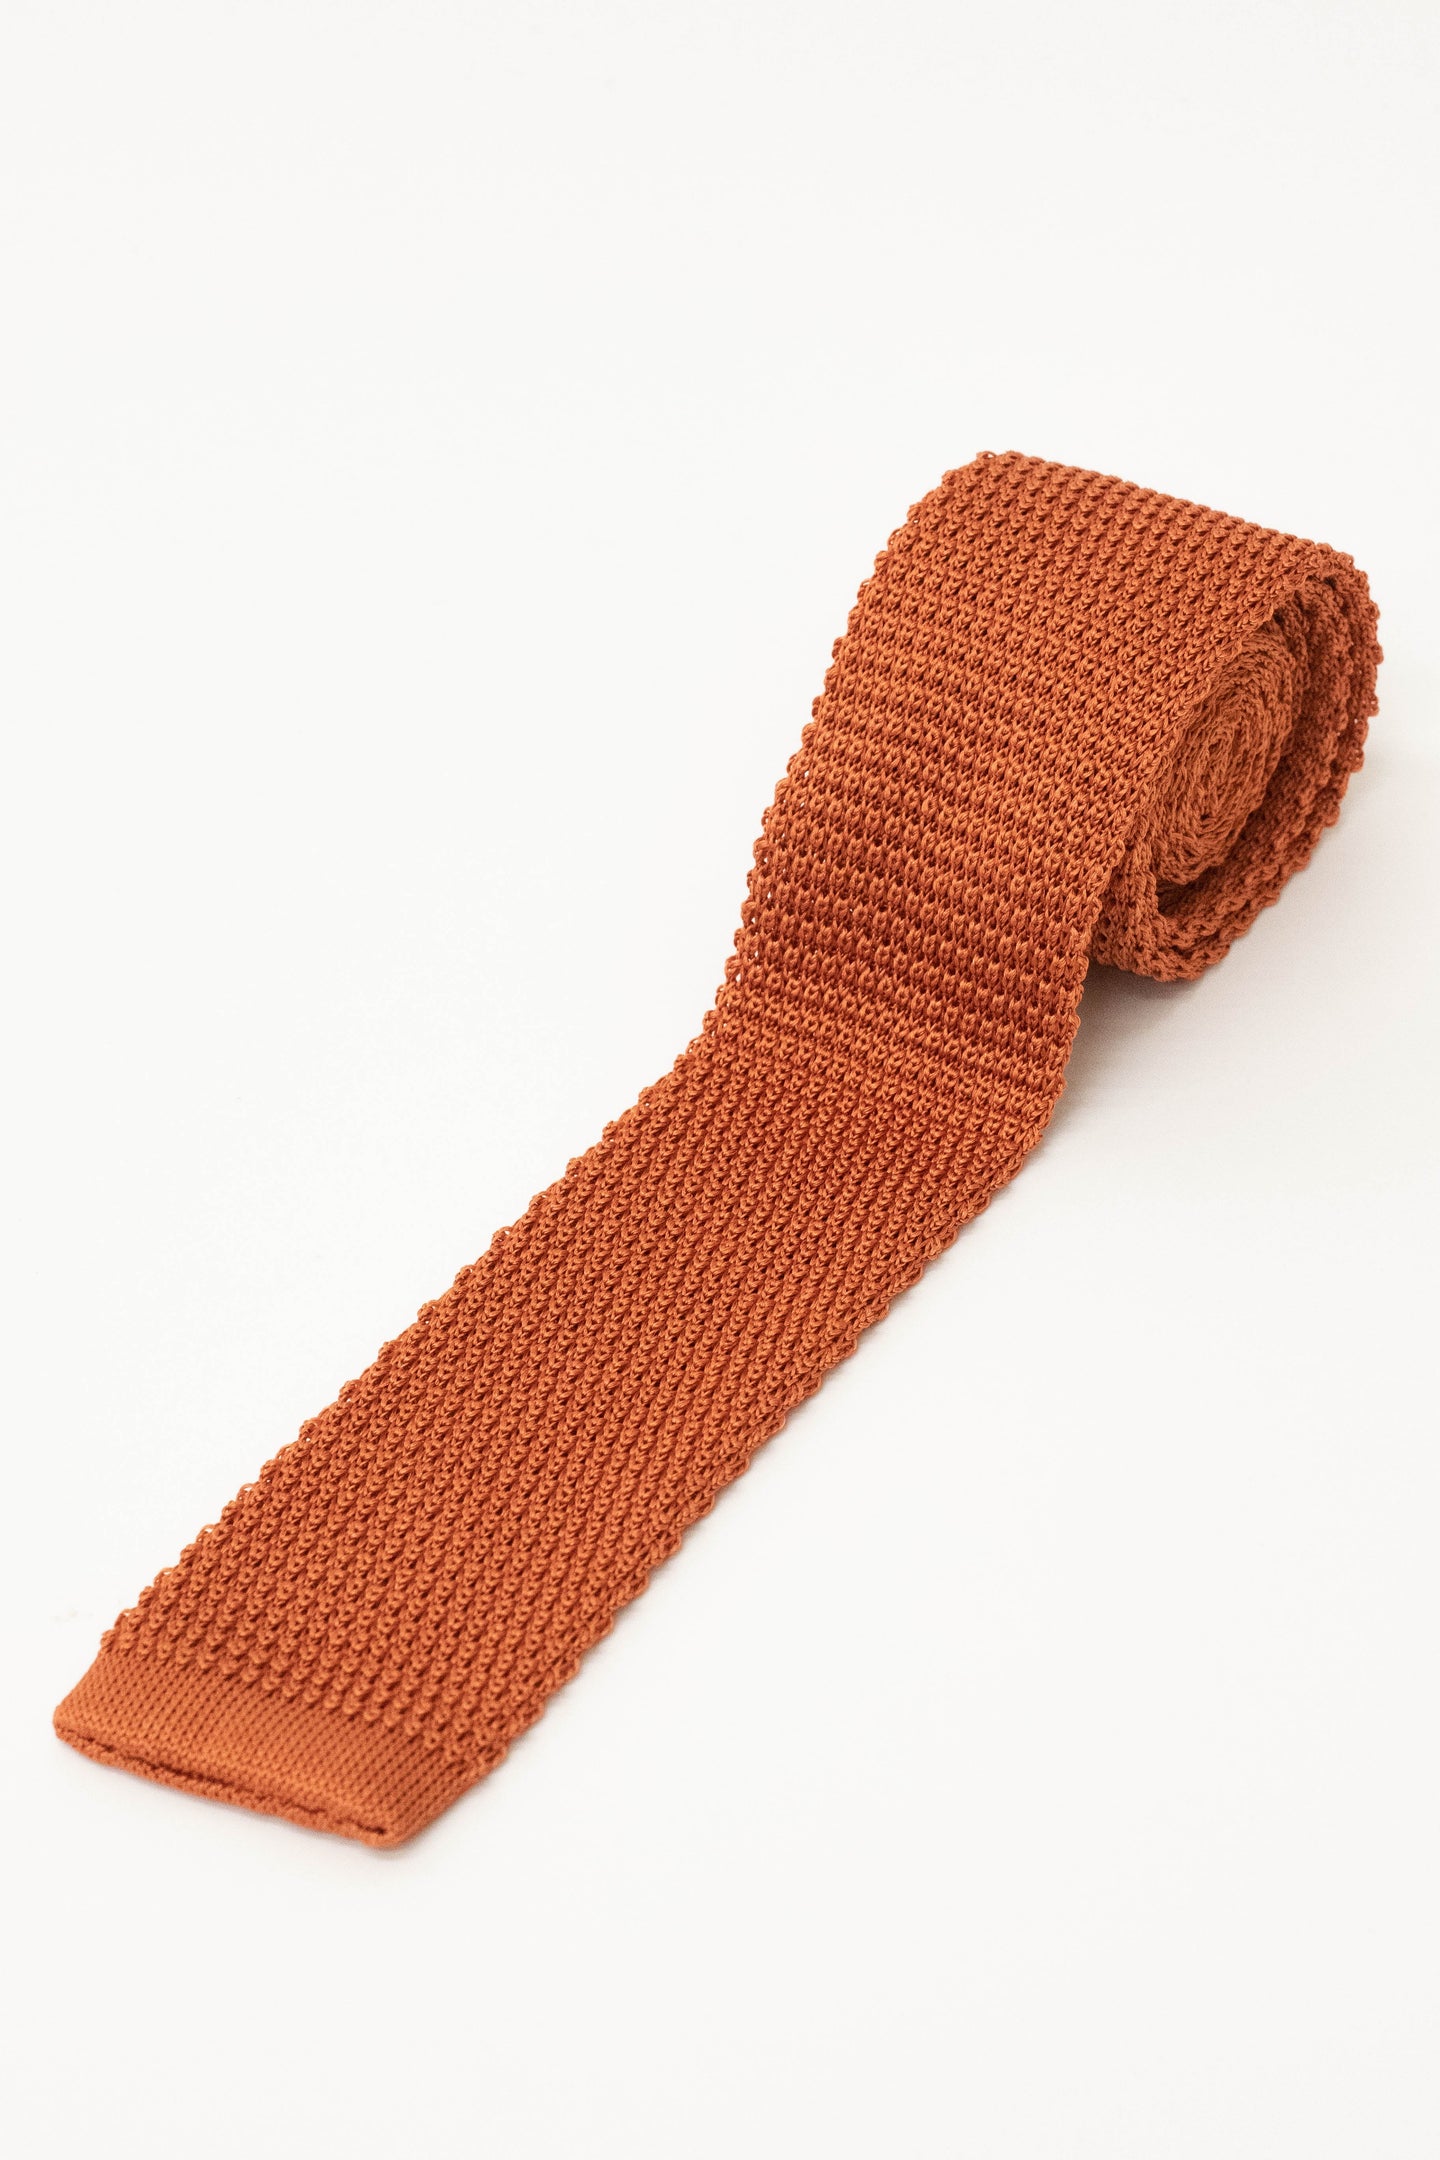 Knightsbridge Neckwear Plain Bronze Silk Knitted Tie